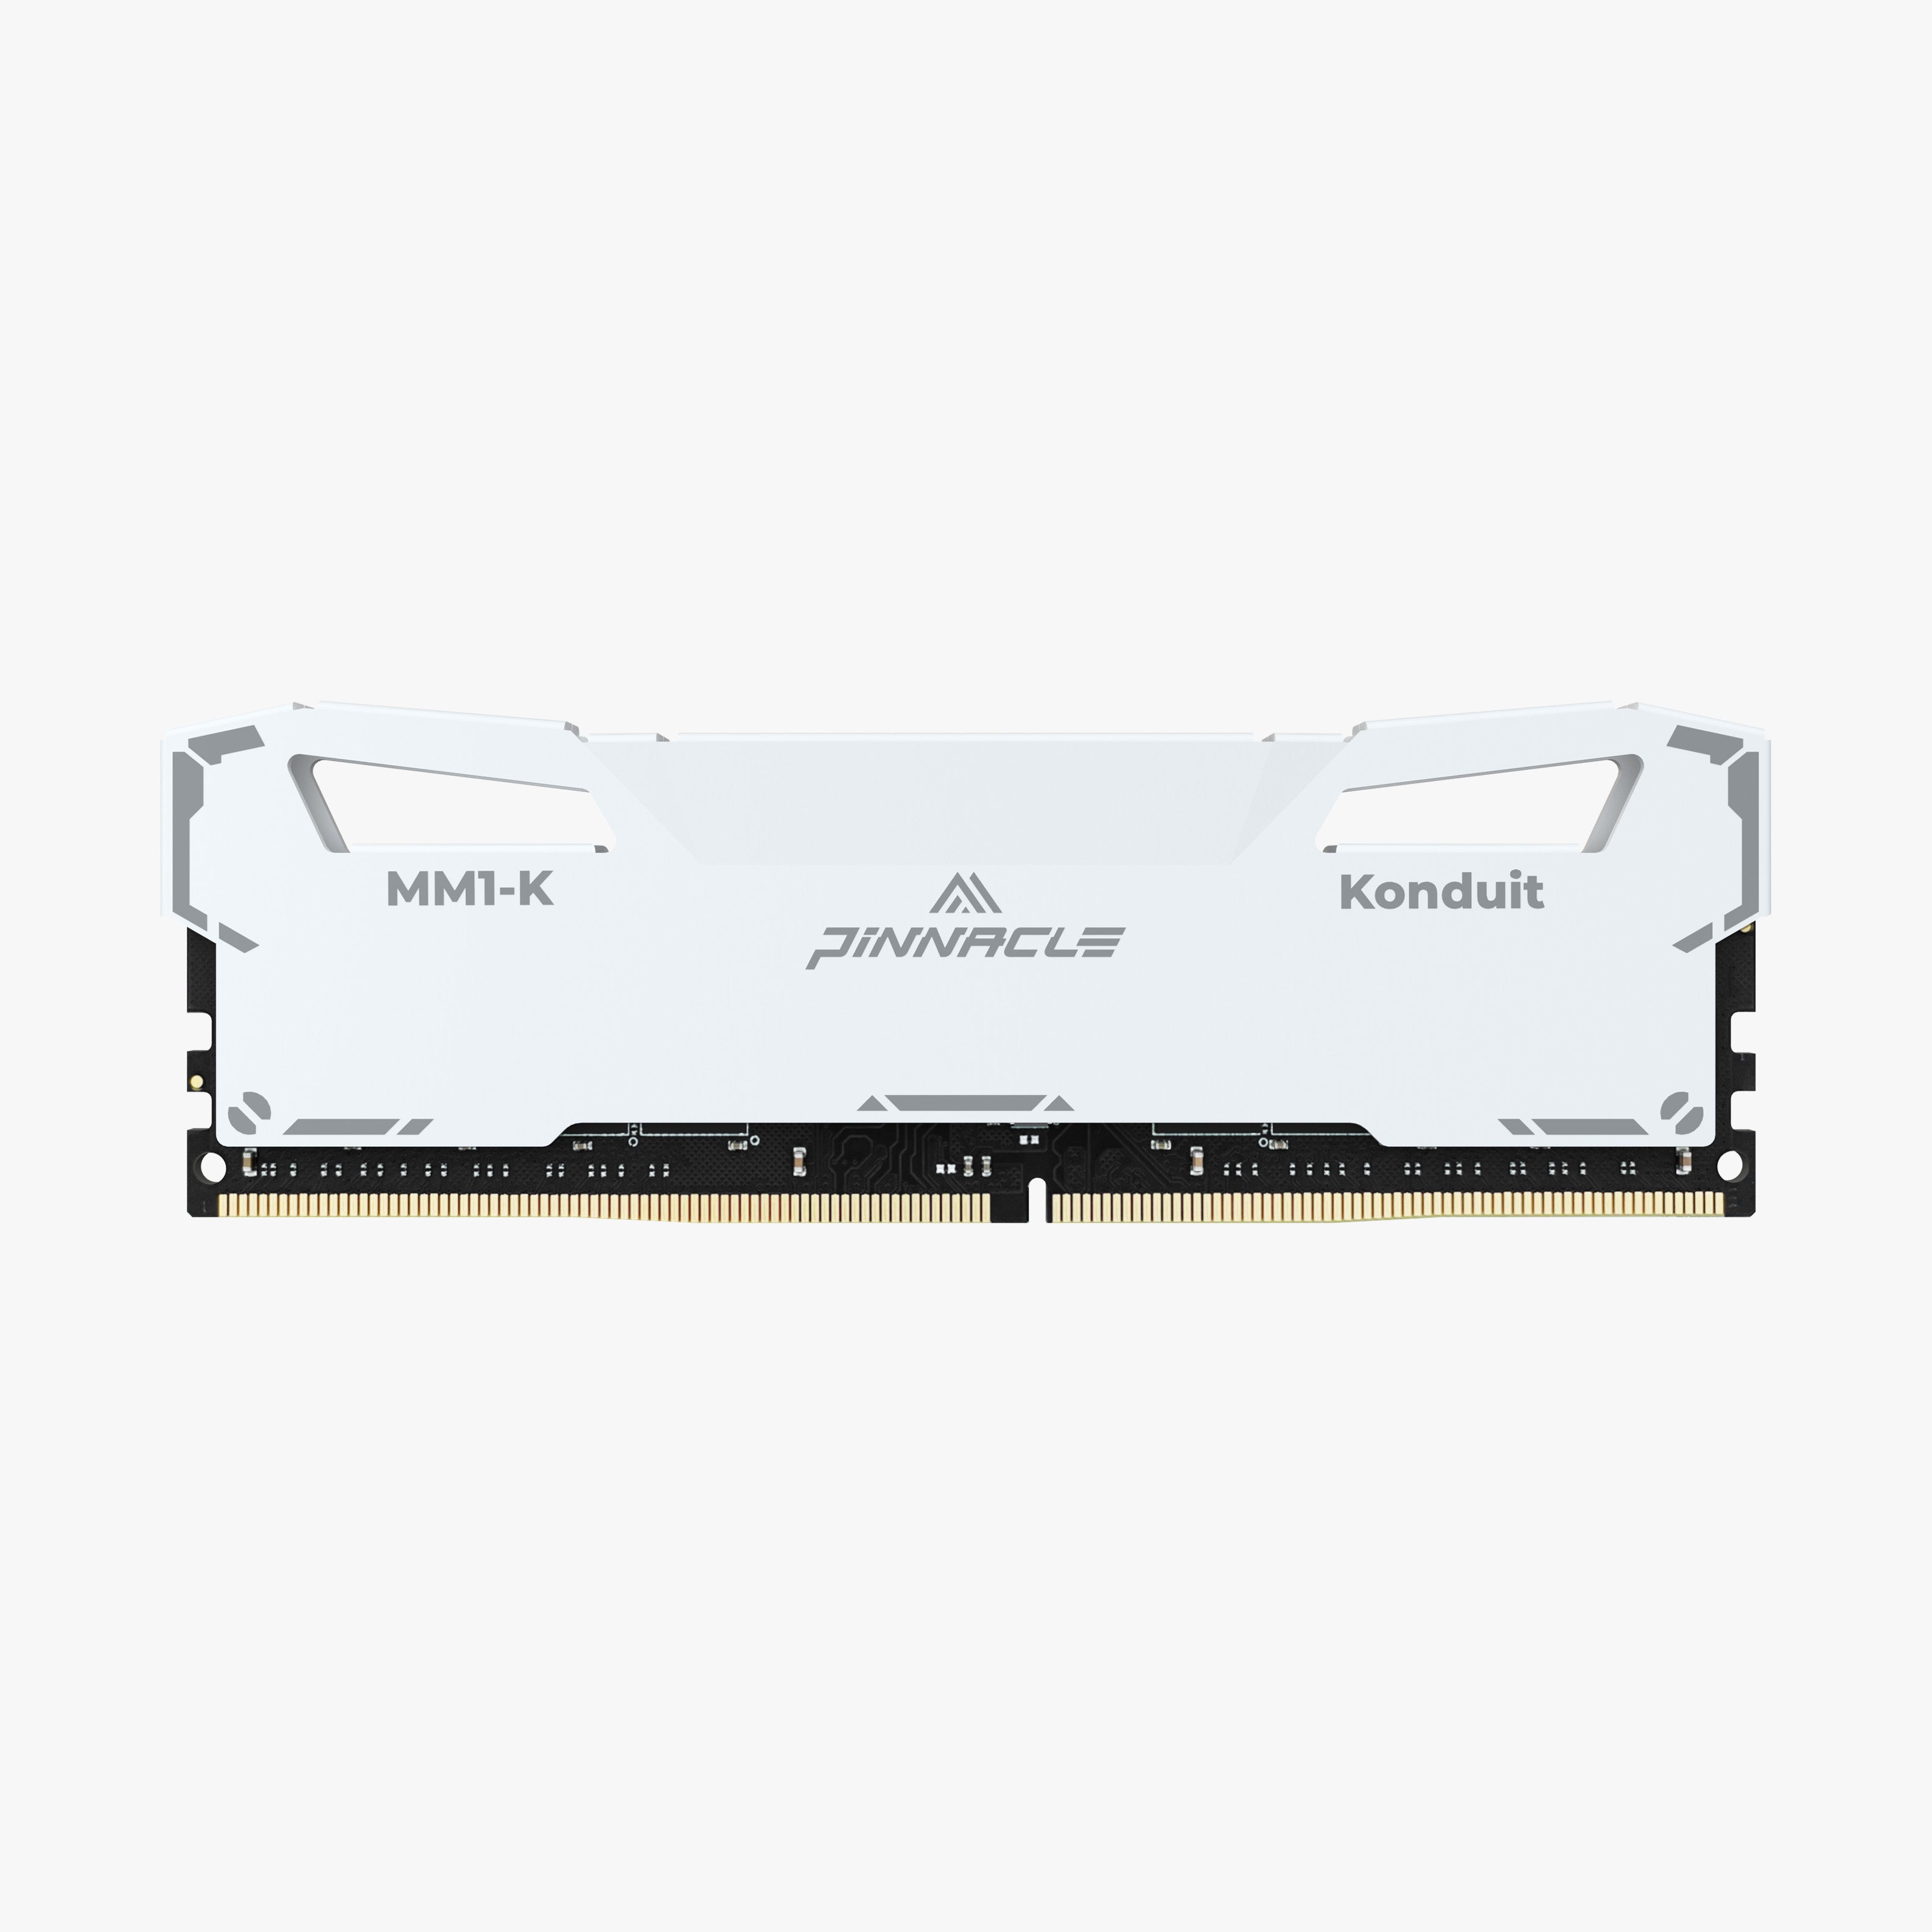 PINNACLE MM1-KONDUIT Performance DDR4 UDIMM Memory White